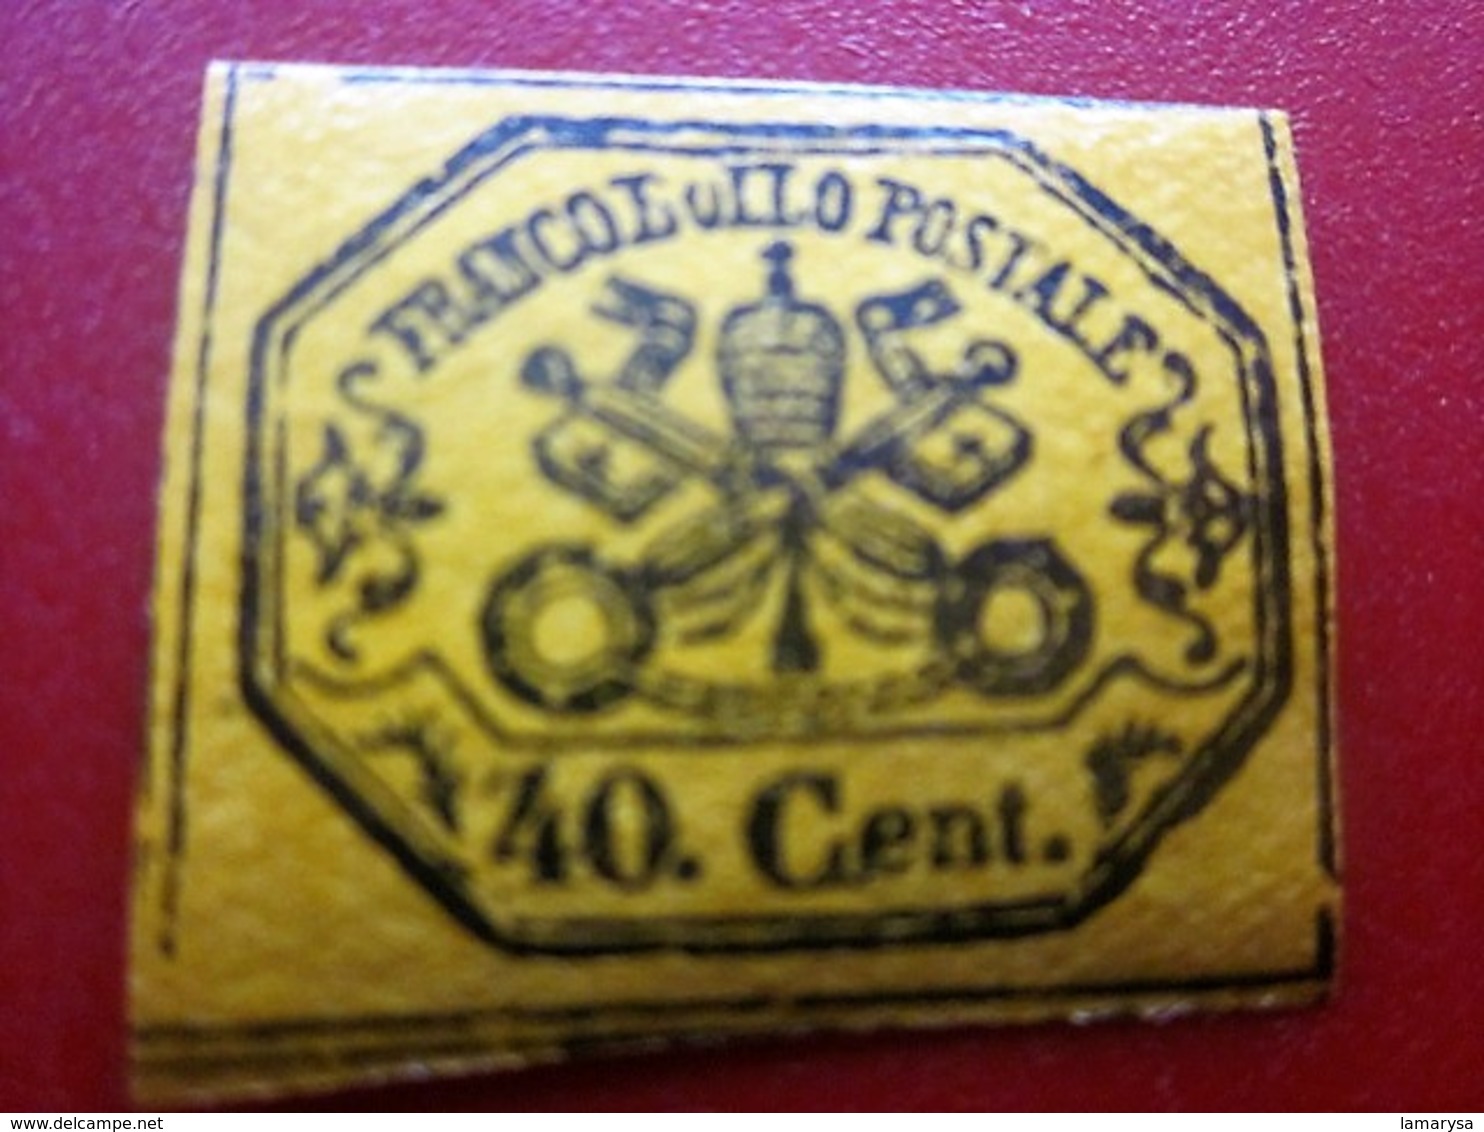 ITALIE ITALIA FRANCOBOLLO POSTALE 40 C VATICANO VATICAN NEUF** MNH POSTE VATICANE Stamp-Timbre Europe Vatican  ...-1929 - ...-1929 Préphilatélie